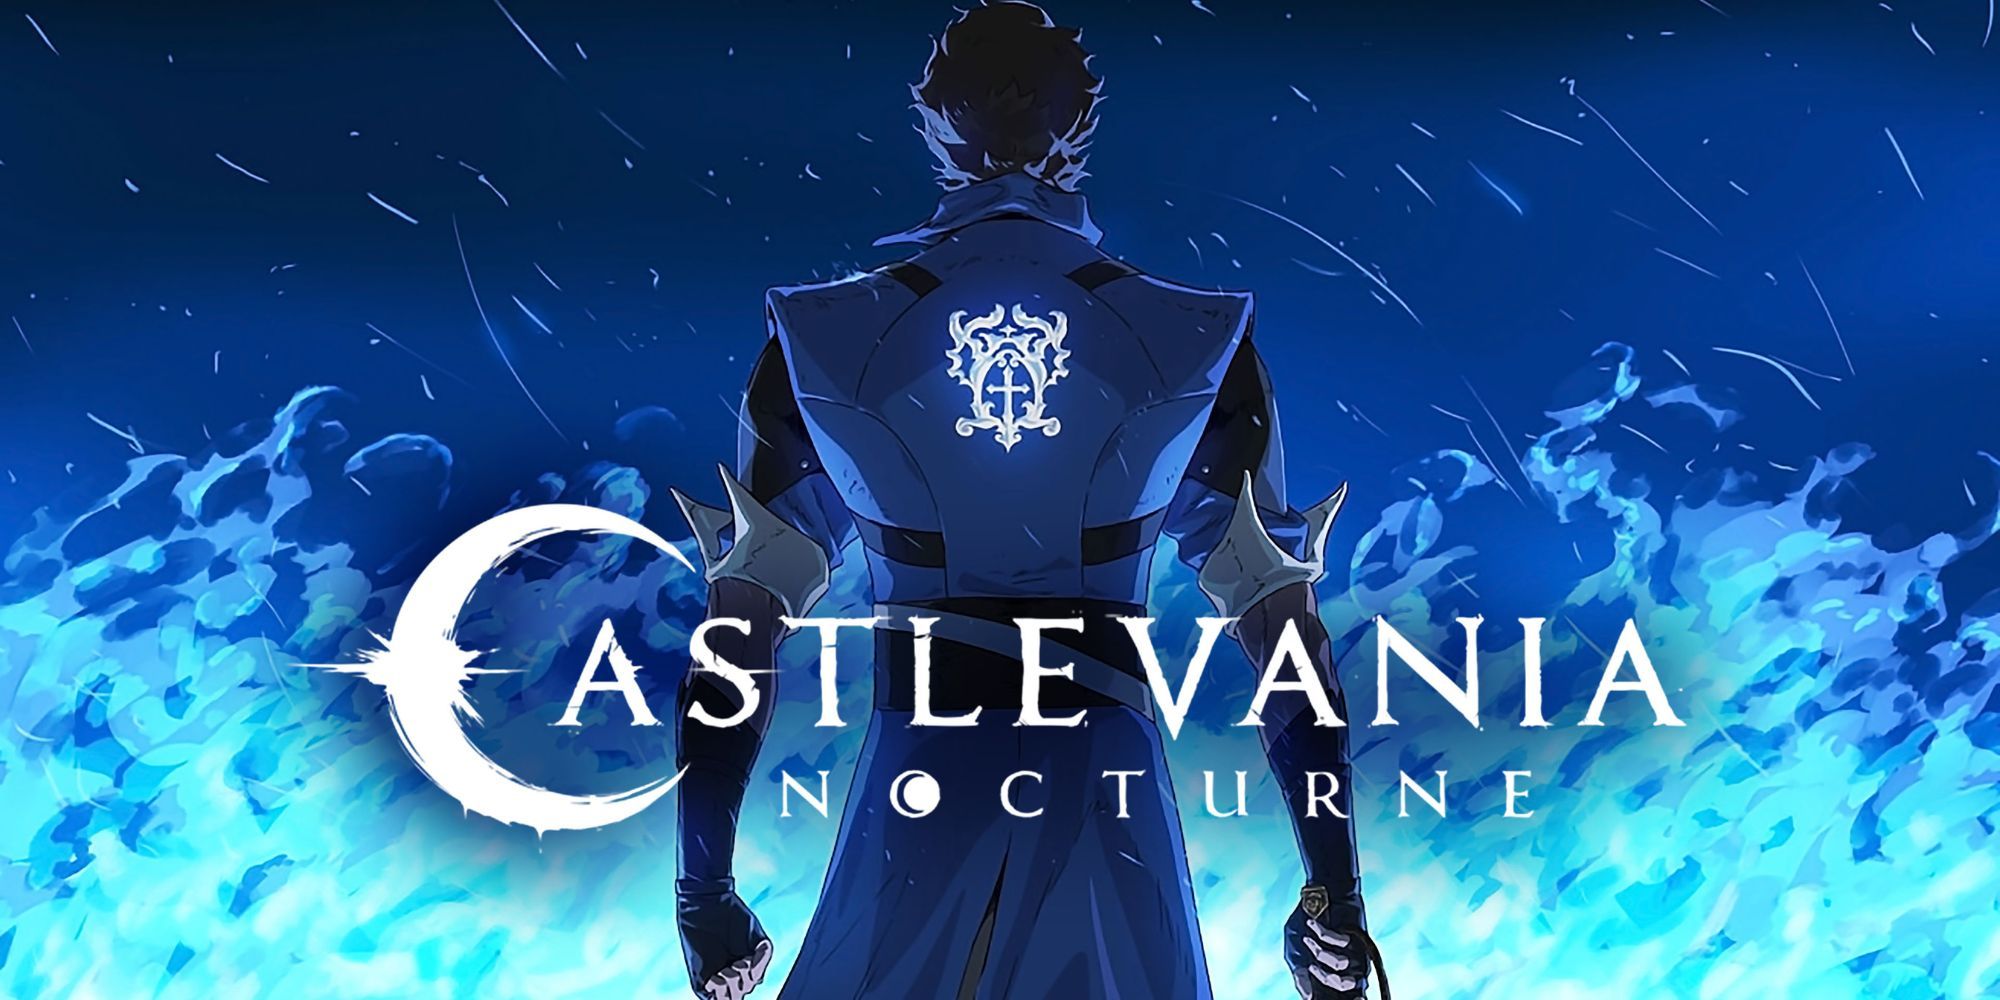 Castlevania Nocturne Season 2 Officially Confirmed